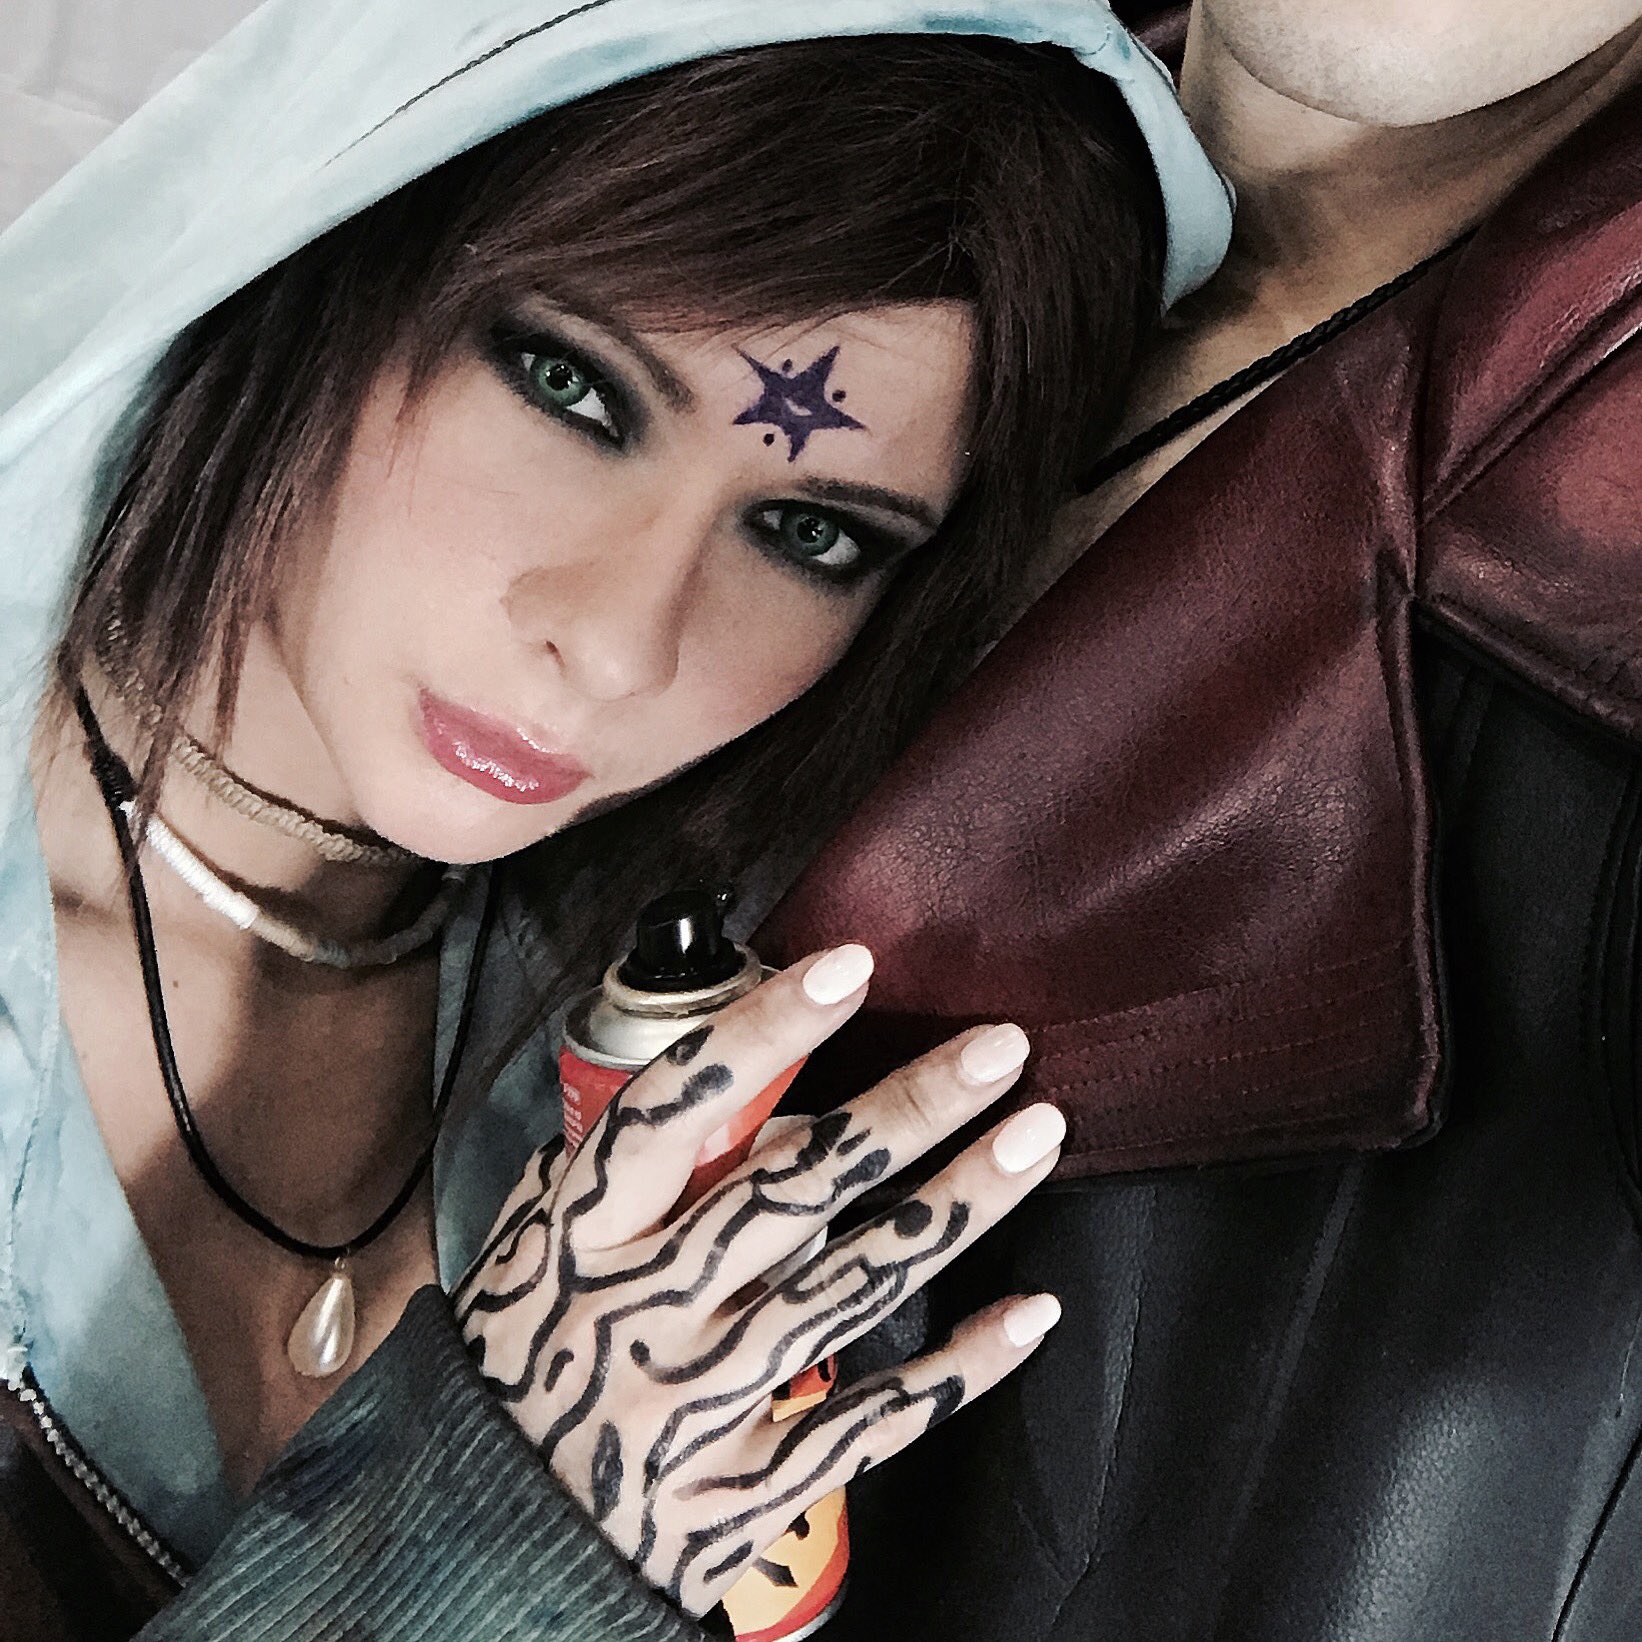 Kat and Dante - DmC - cosplay convent